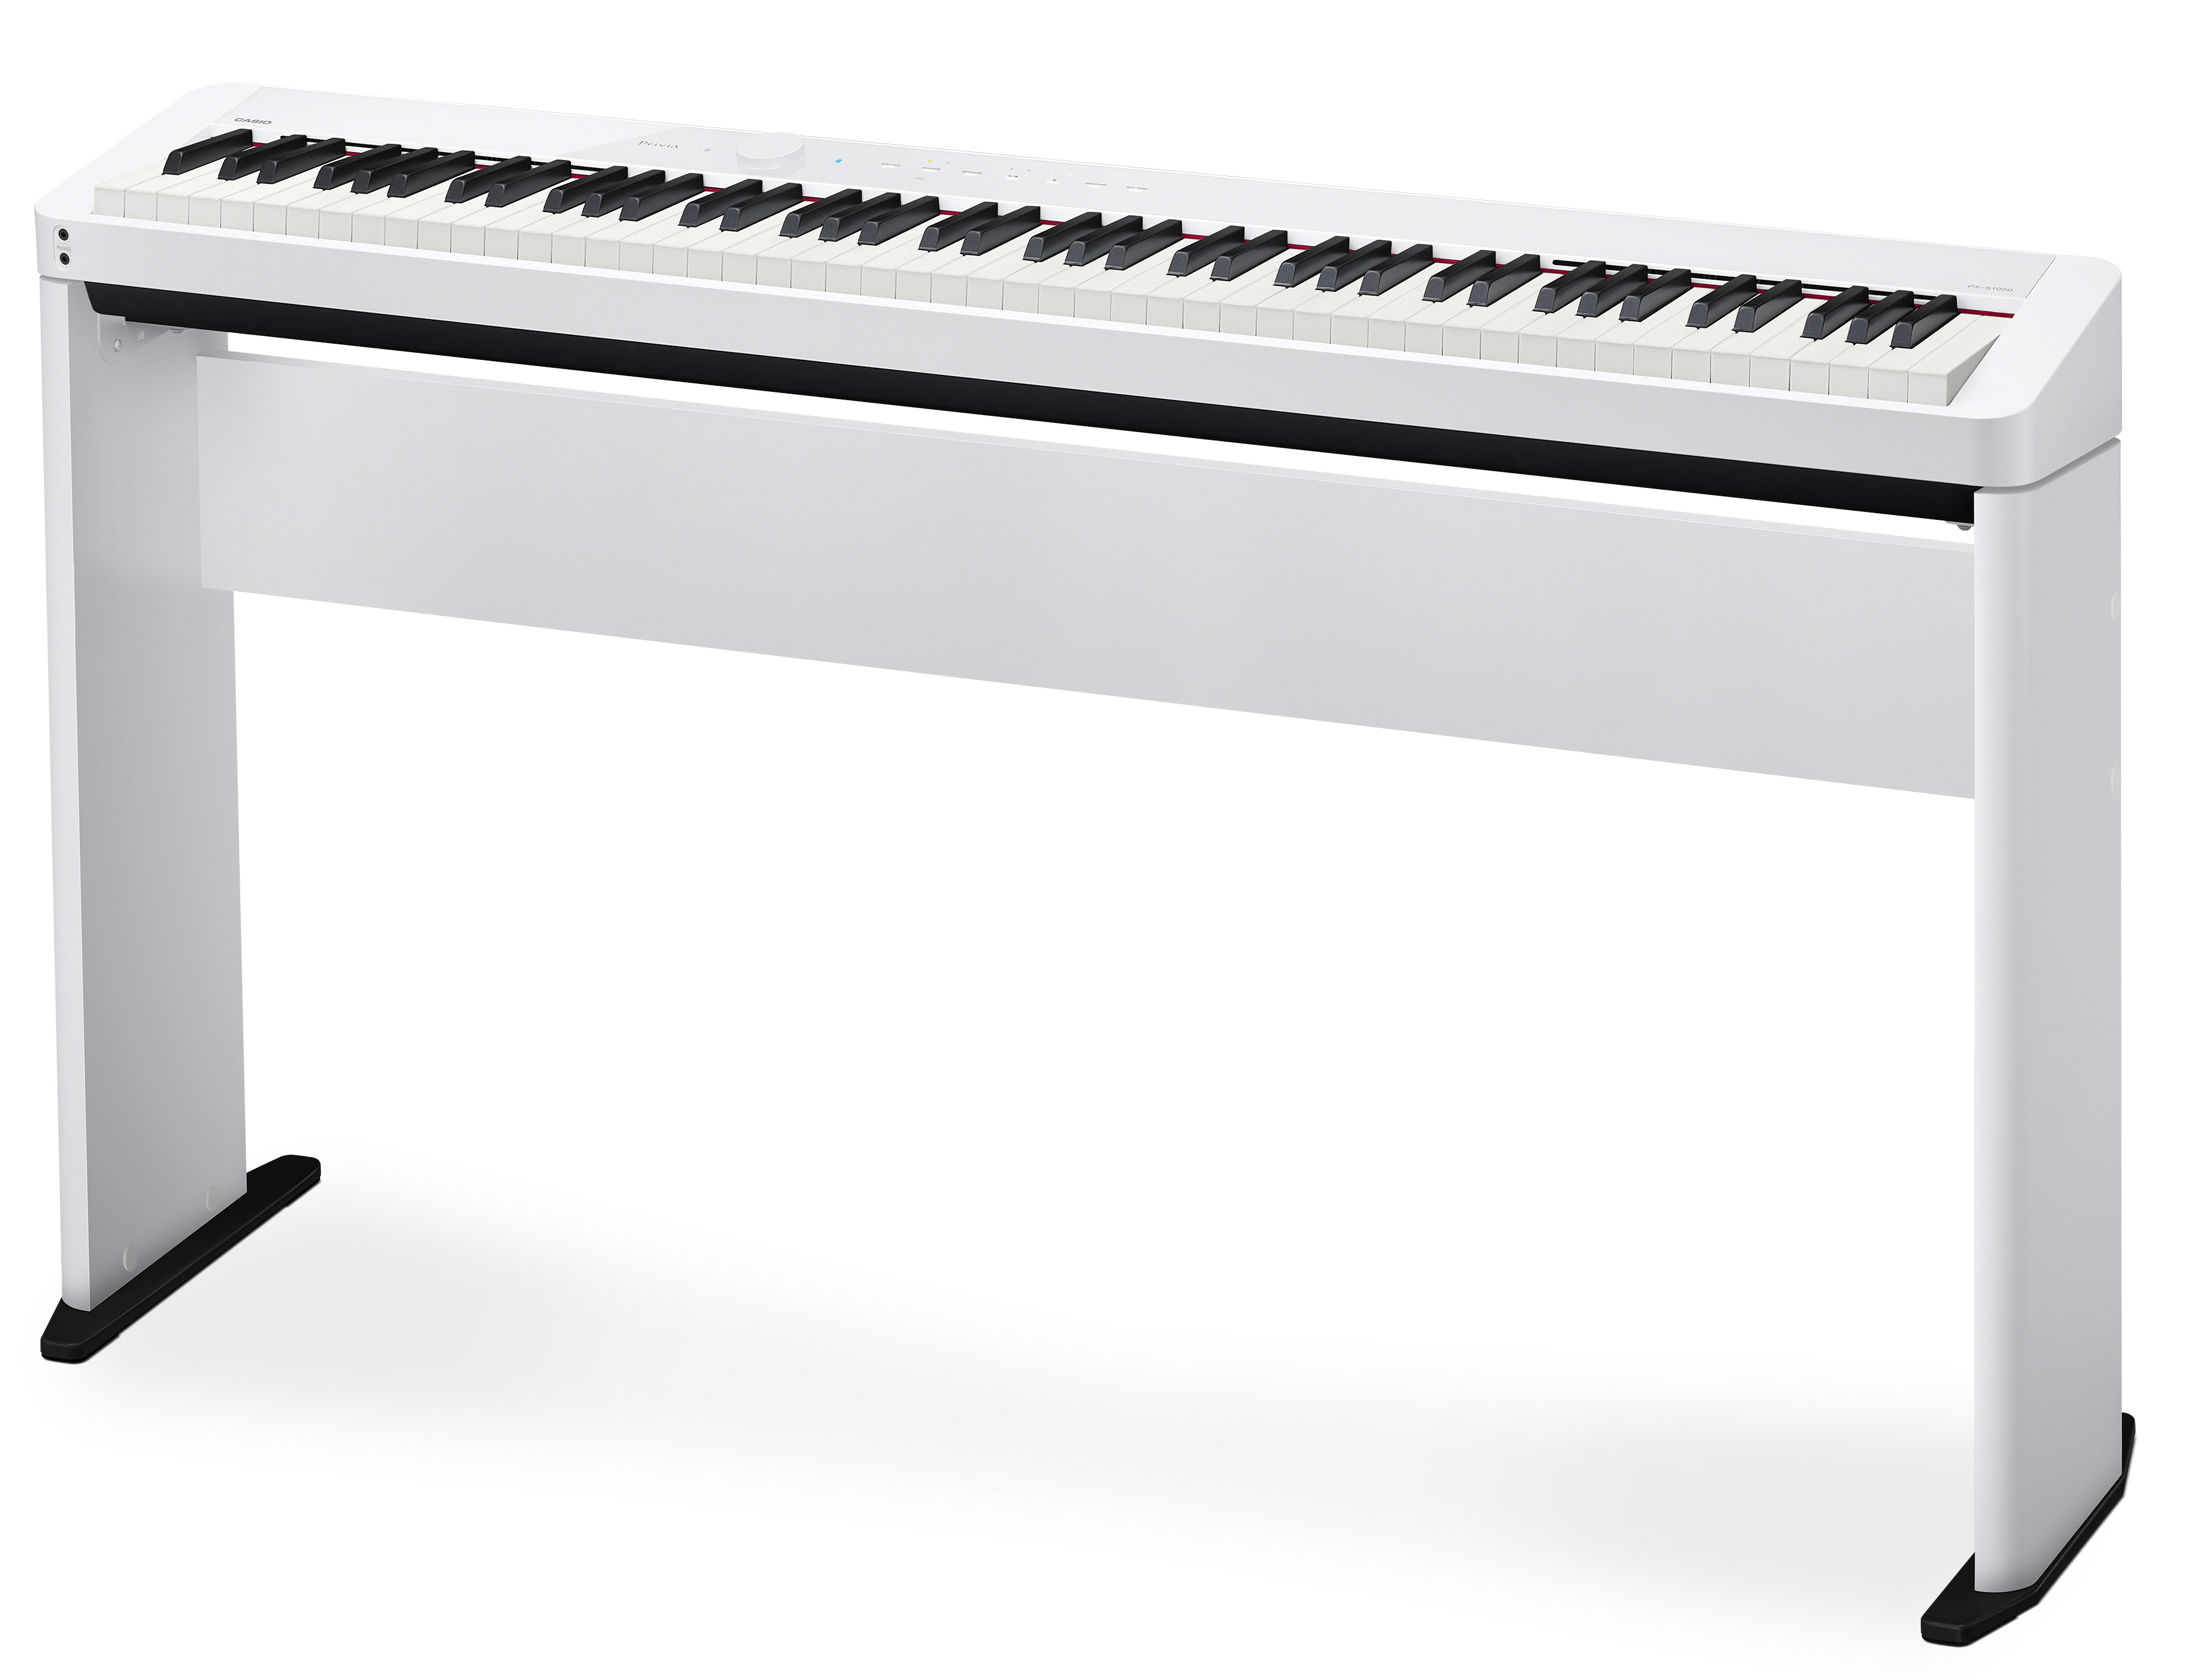 Casio Privia PX-S1000 Digital Piano - White w/ CS-68 Stand | eBay